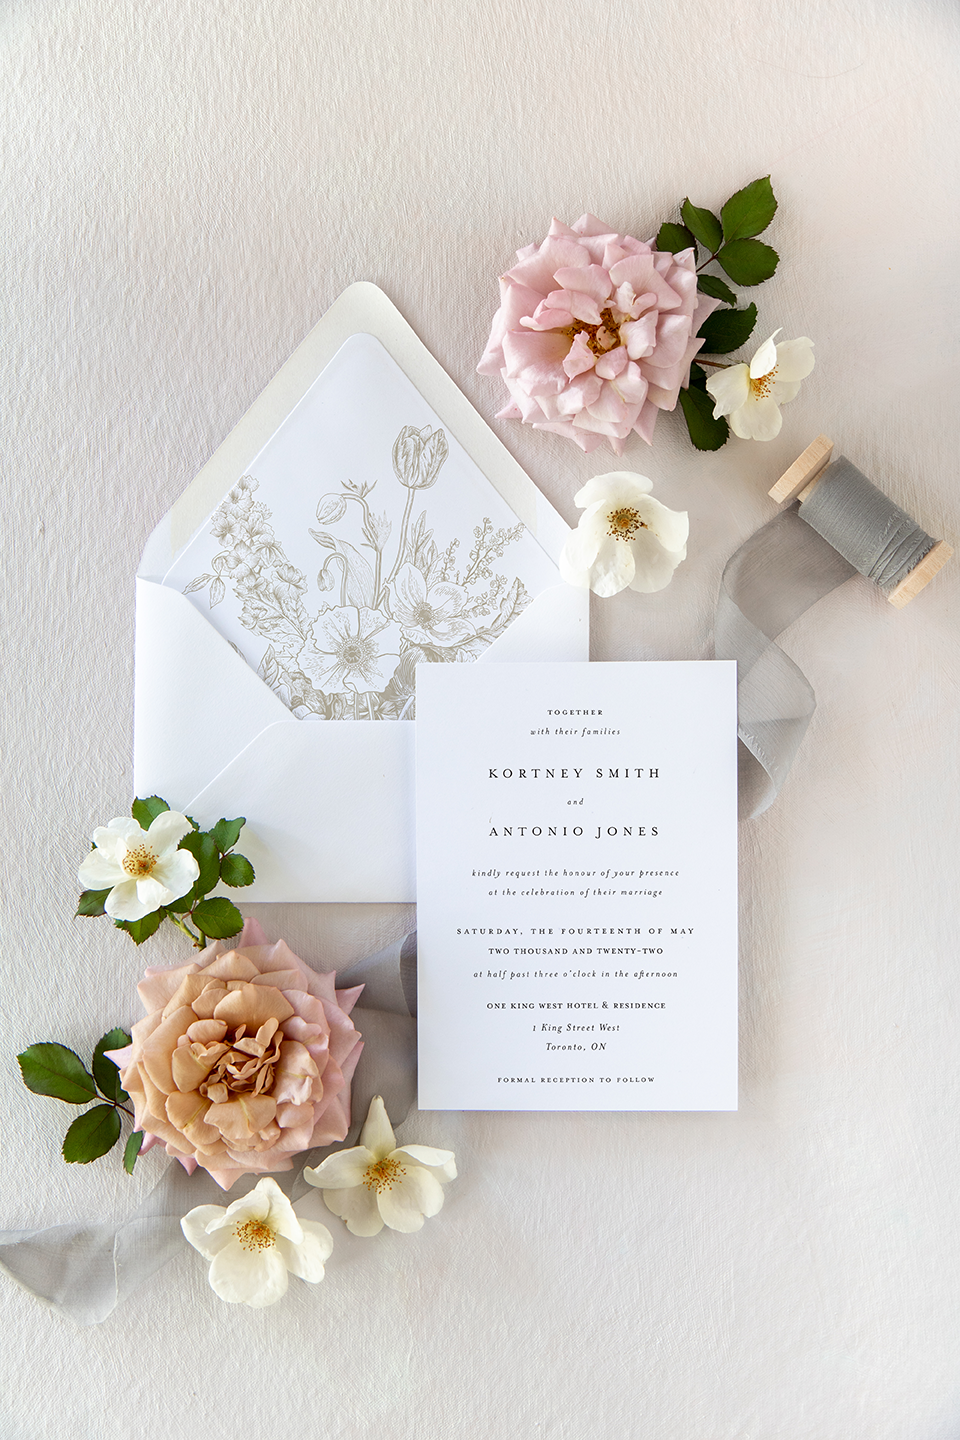 Simple minimalistic wedding invitation card with printed floral envelope liner